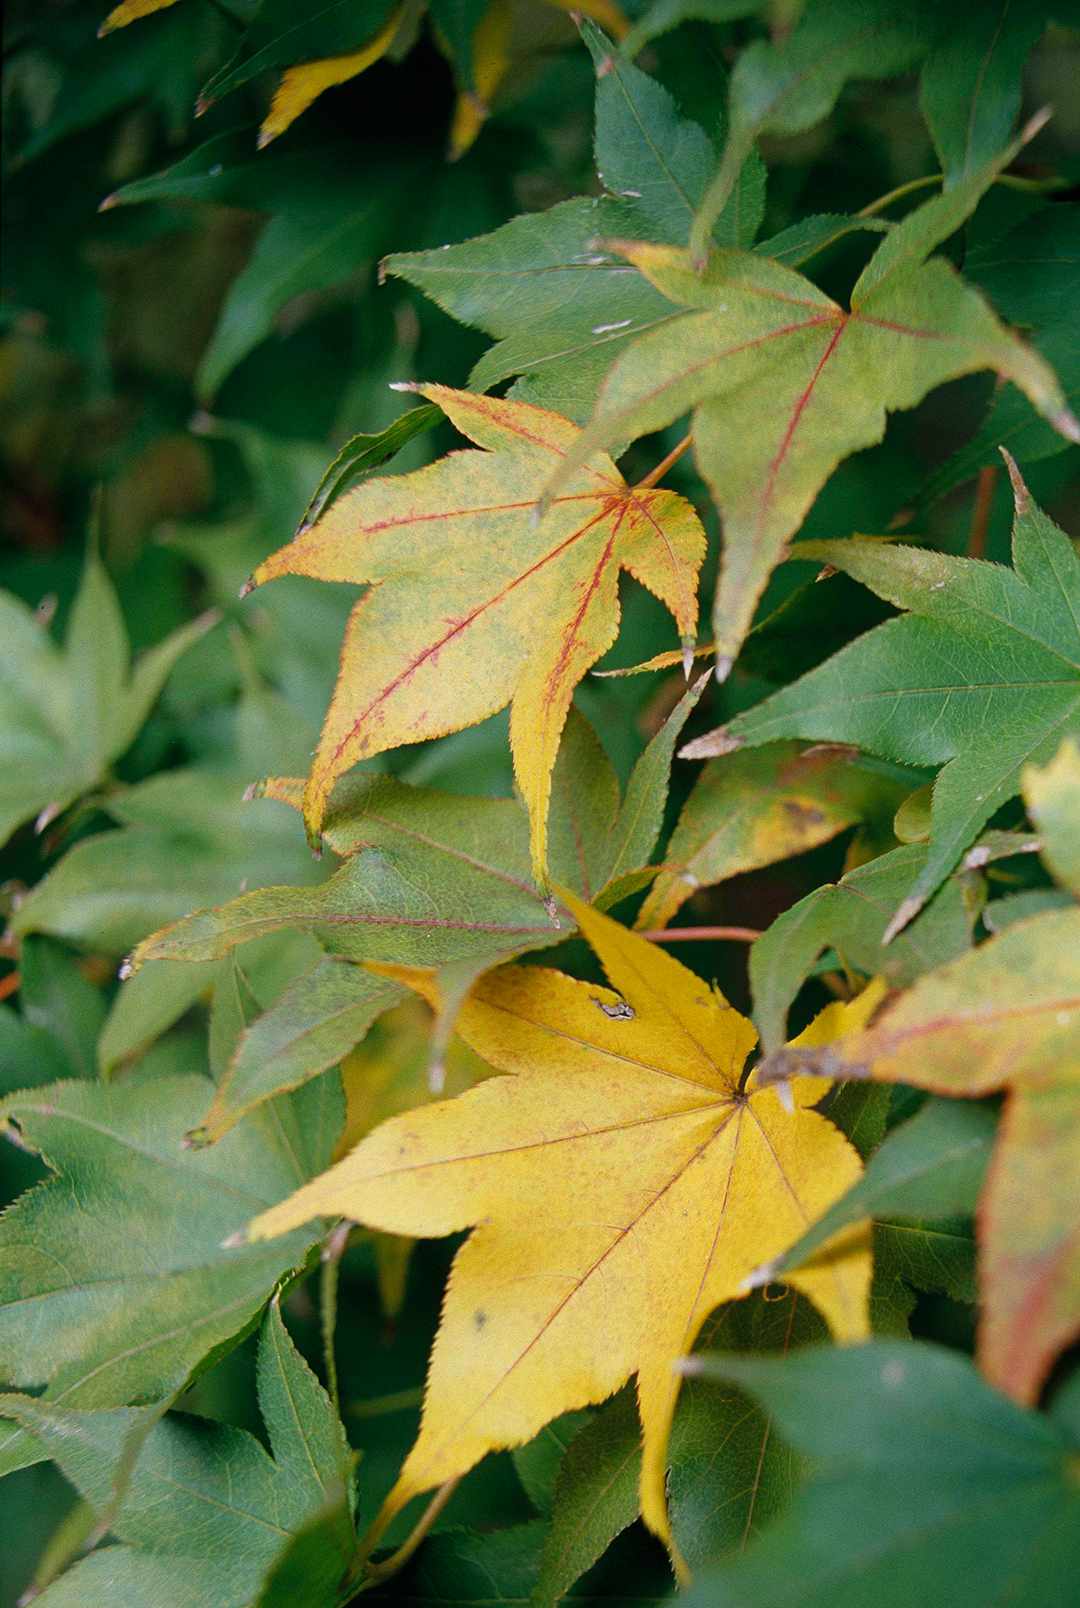 hogyoku japanese maple leaves yellow and green